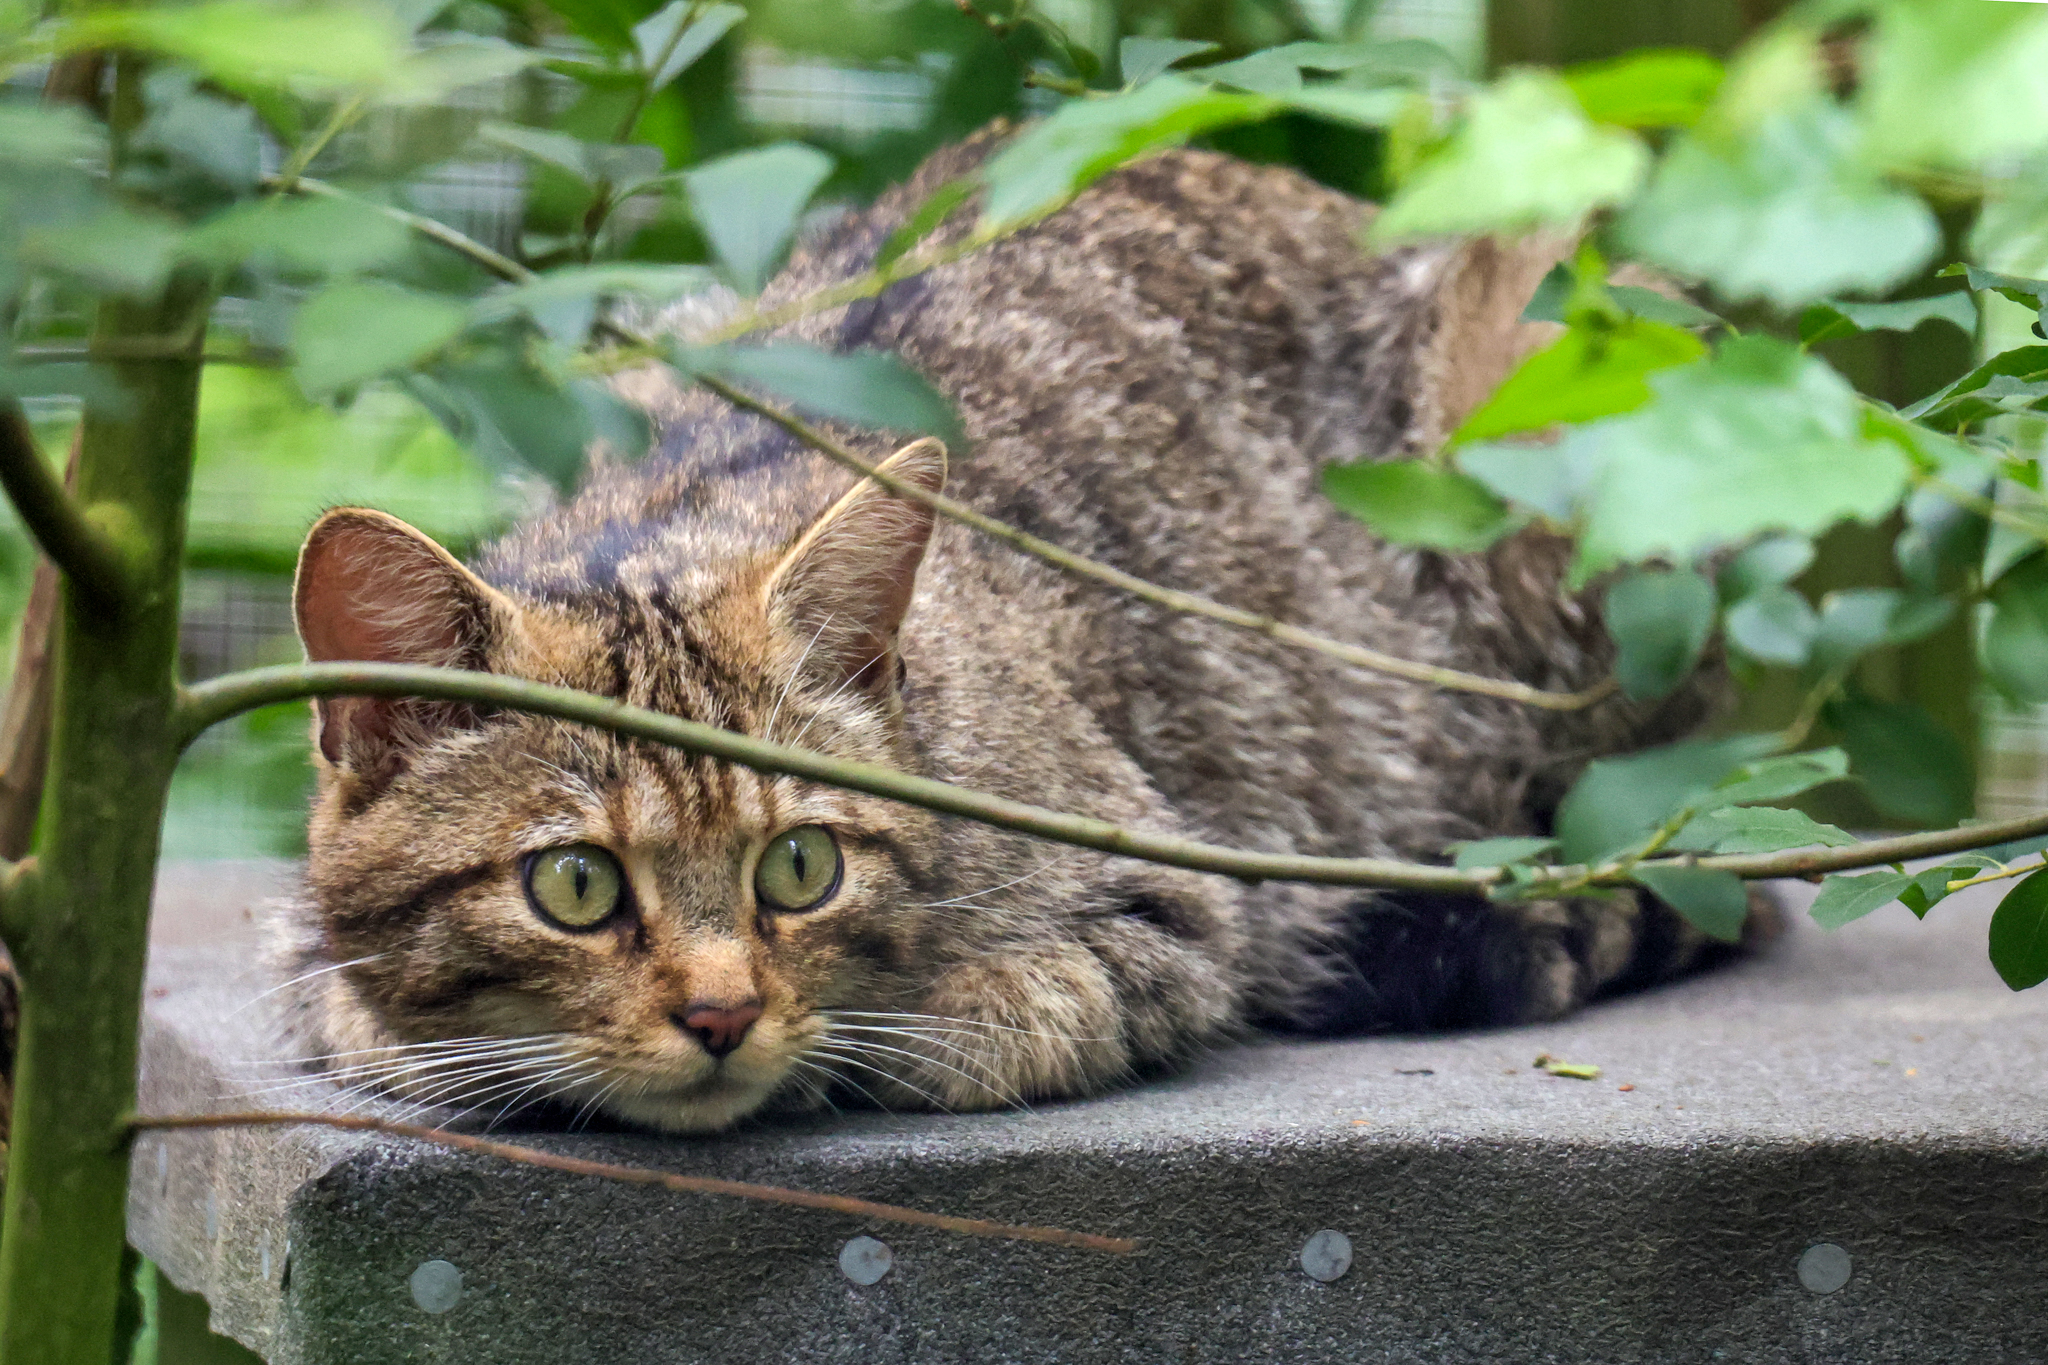 A wildcat kitten peering through branches